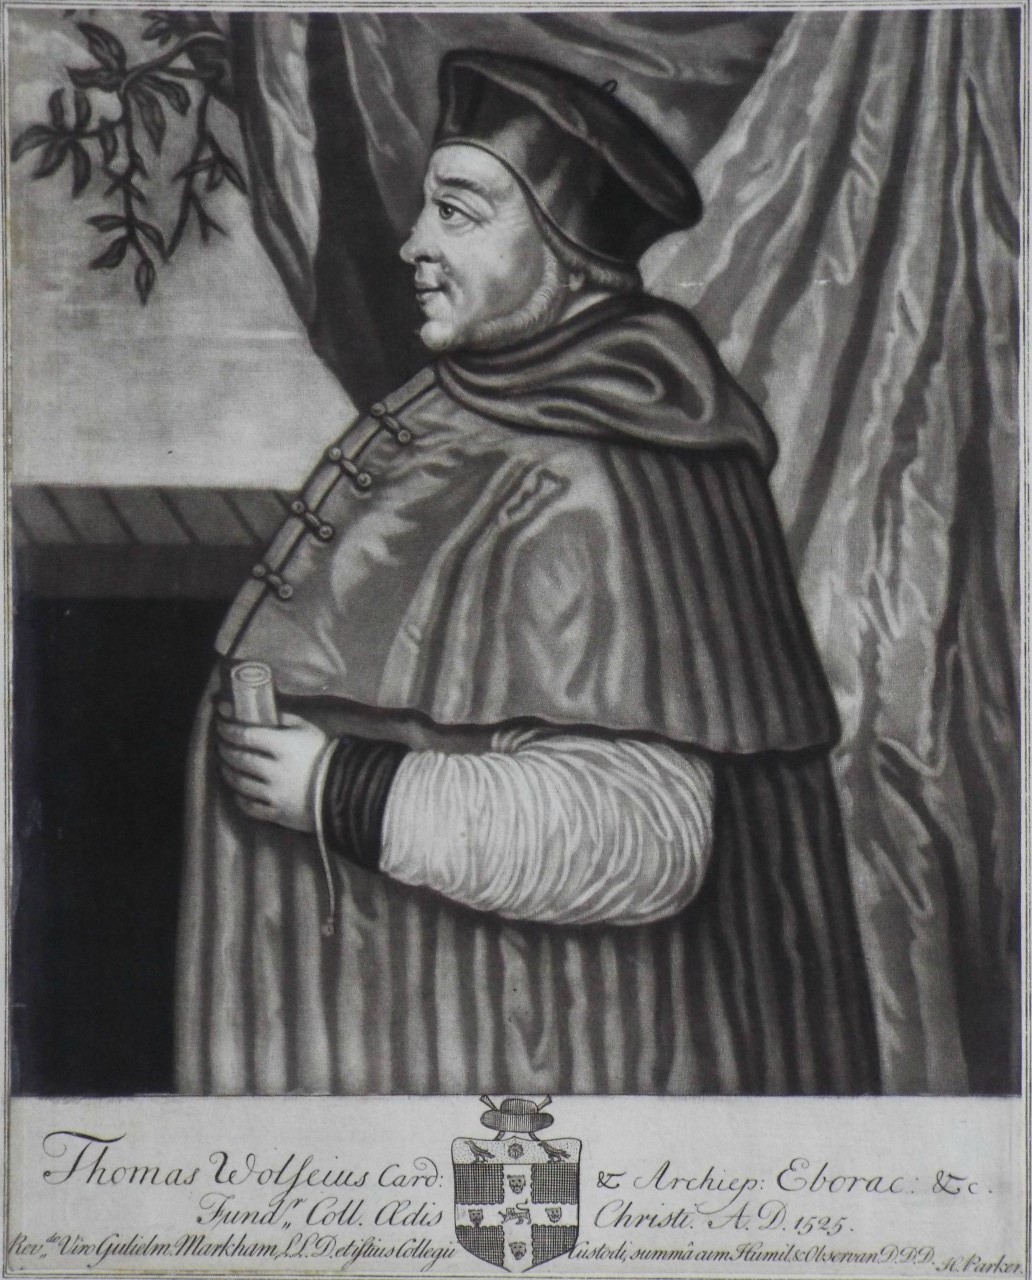 Mezzotint - Thomas Wolseius Card: & Archiep: Eborac: &c. Fundr Coll. Aedis Christi. A. D. 1525. - Parker